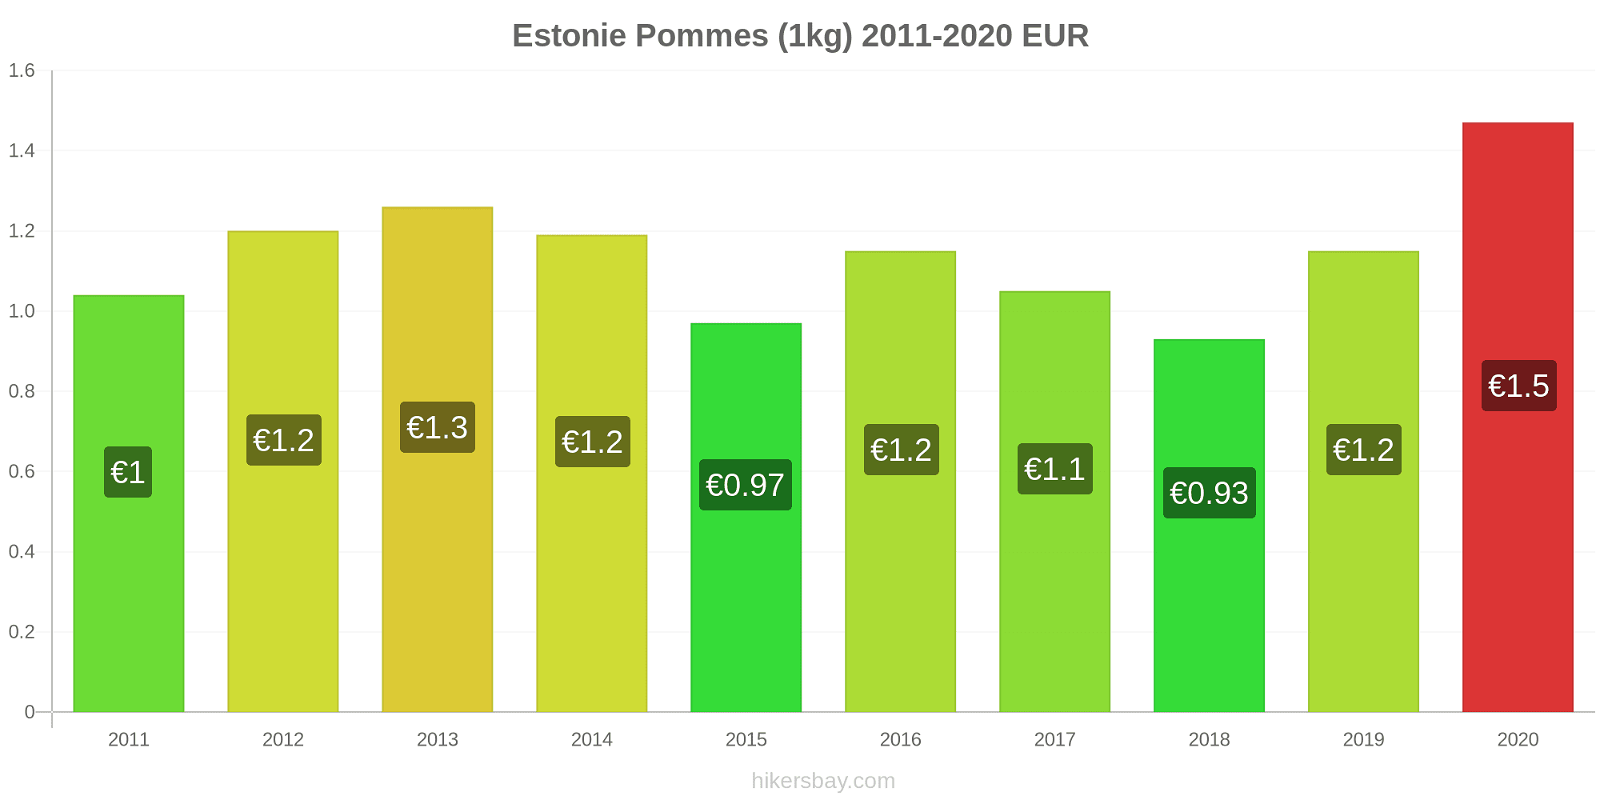 Estonie changements de prix Pommes (1kg) hikersbay.com